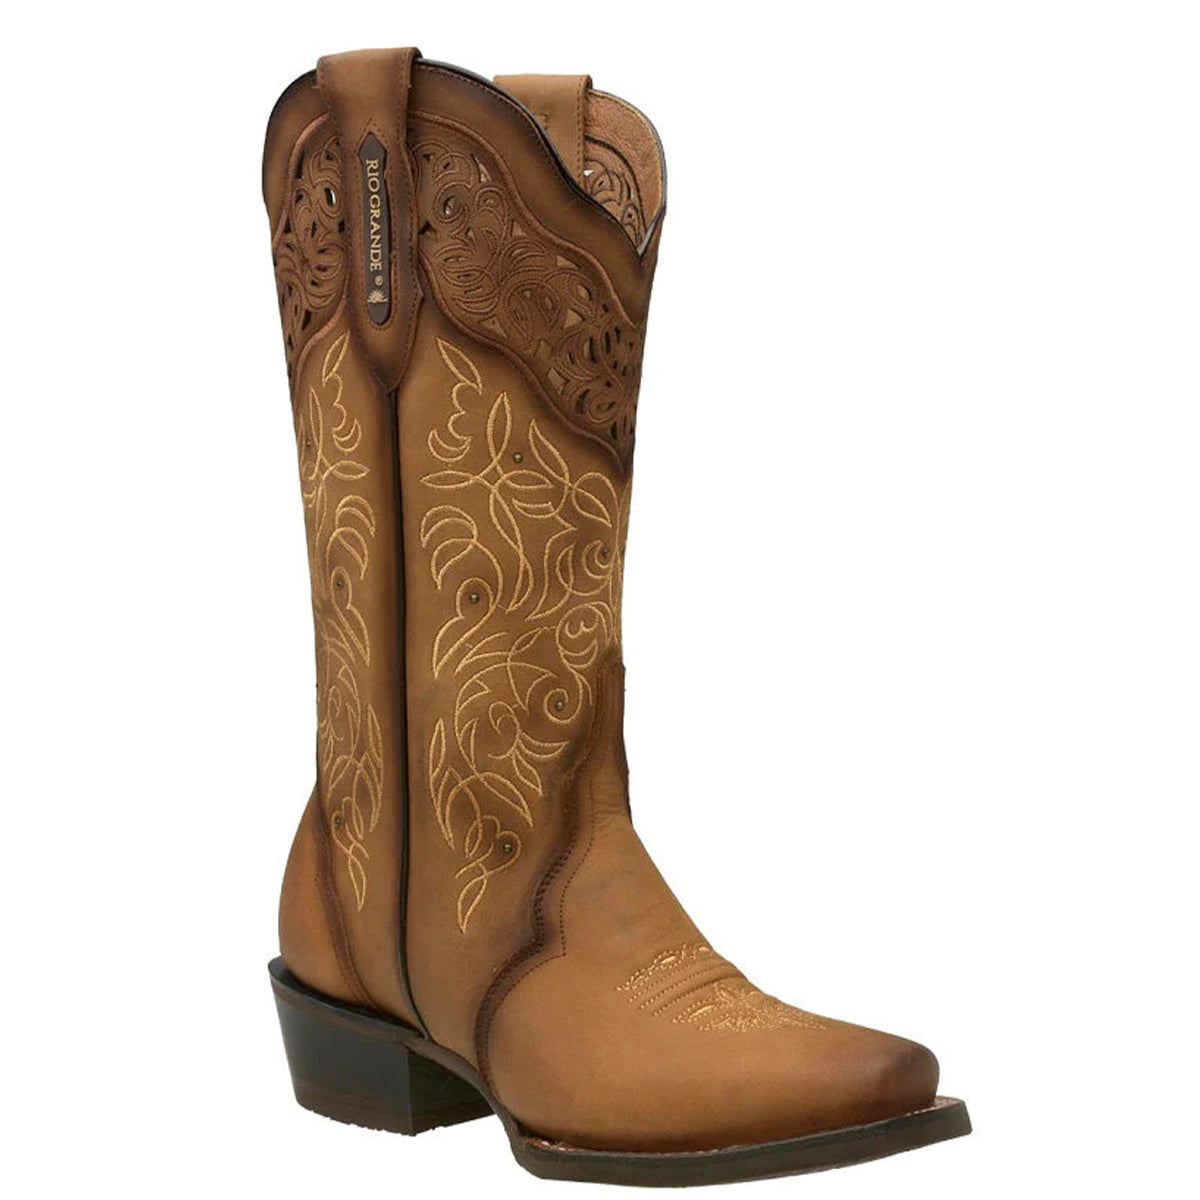 Rio Grande Boots Honey Roble Western Cowgirl – VAQUERO BOOTS